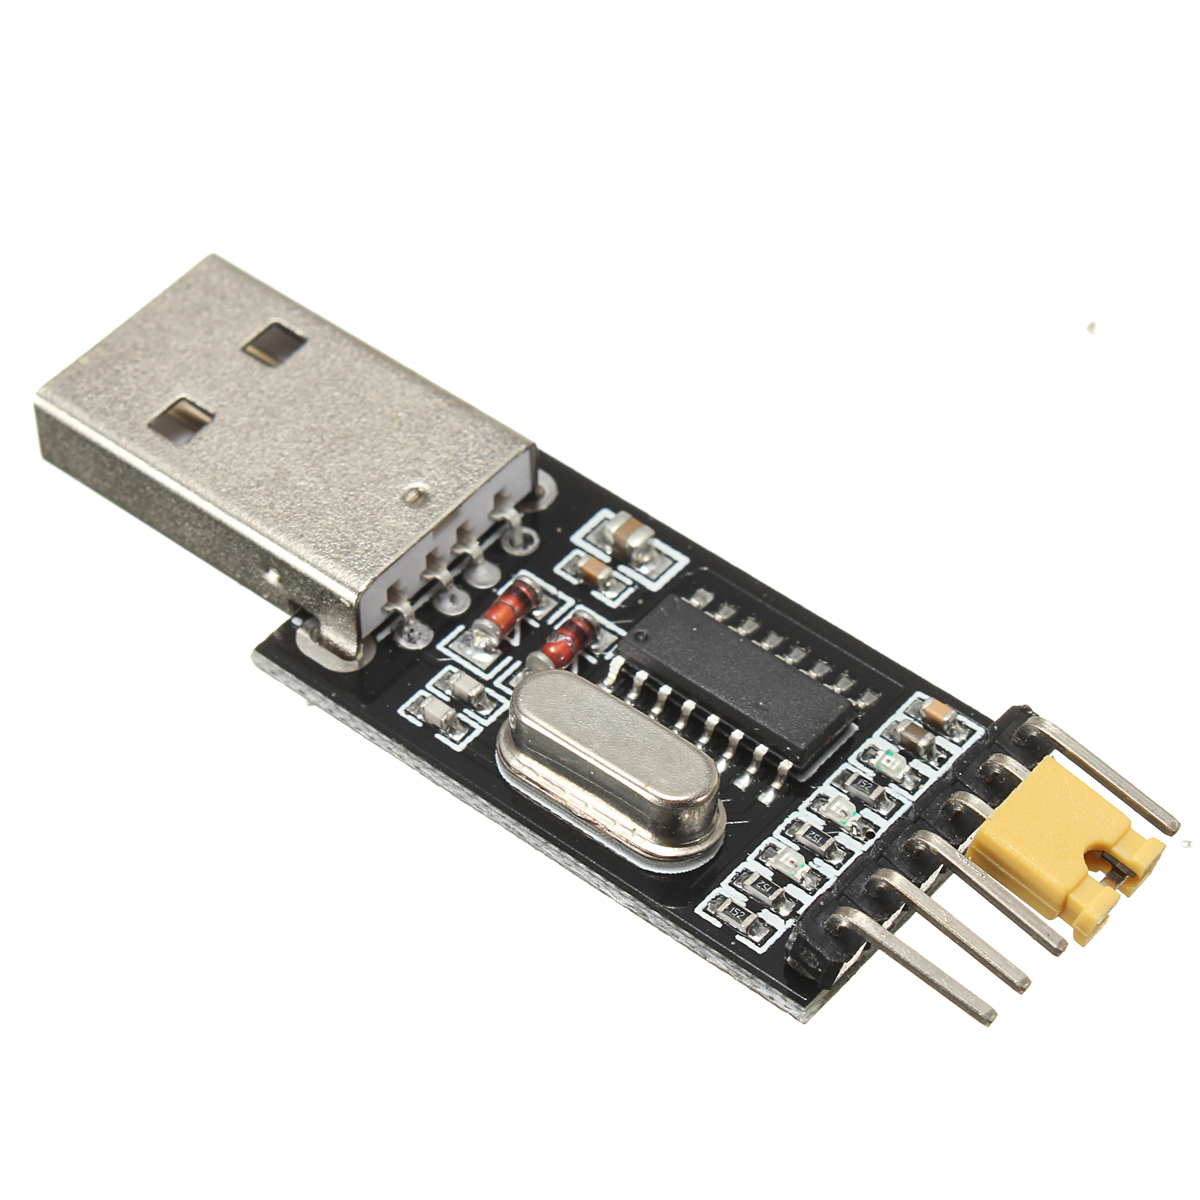 10pcs-33V-5V-USB-to-TTL-Converter-CH340G-UART-Serial-Adapter-Module-STC-1314967-3